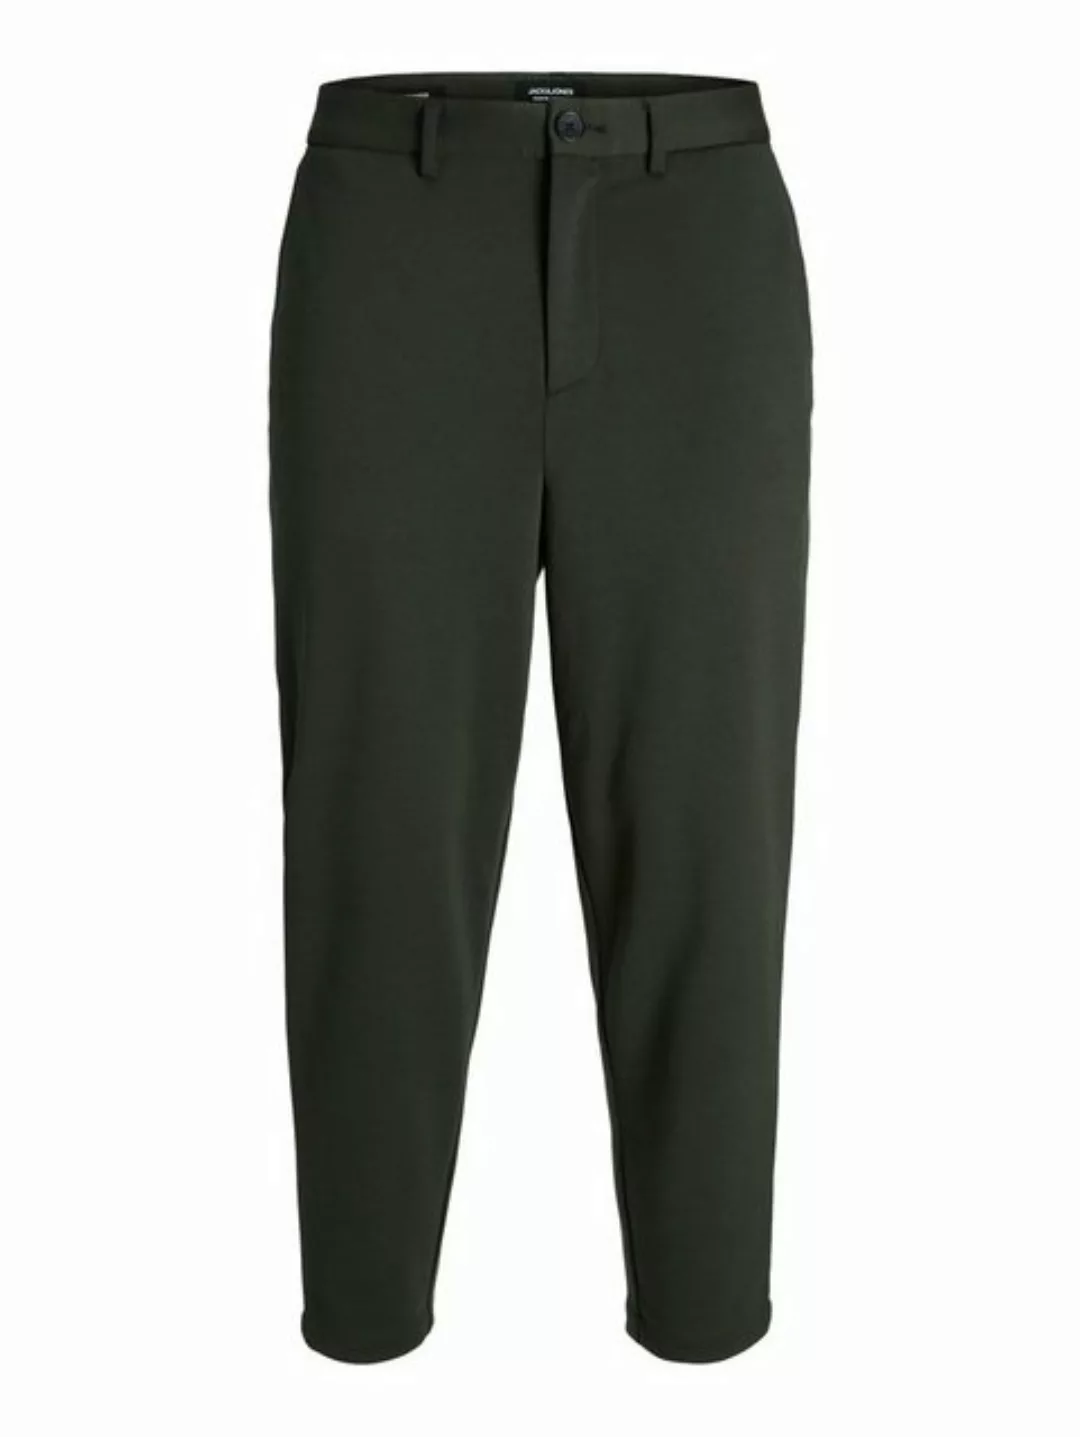 Jack & Jones Chinohose Lockere Stoffhose Hose Baggy Style Chino Pants JPSTK günstig online kaufen